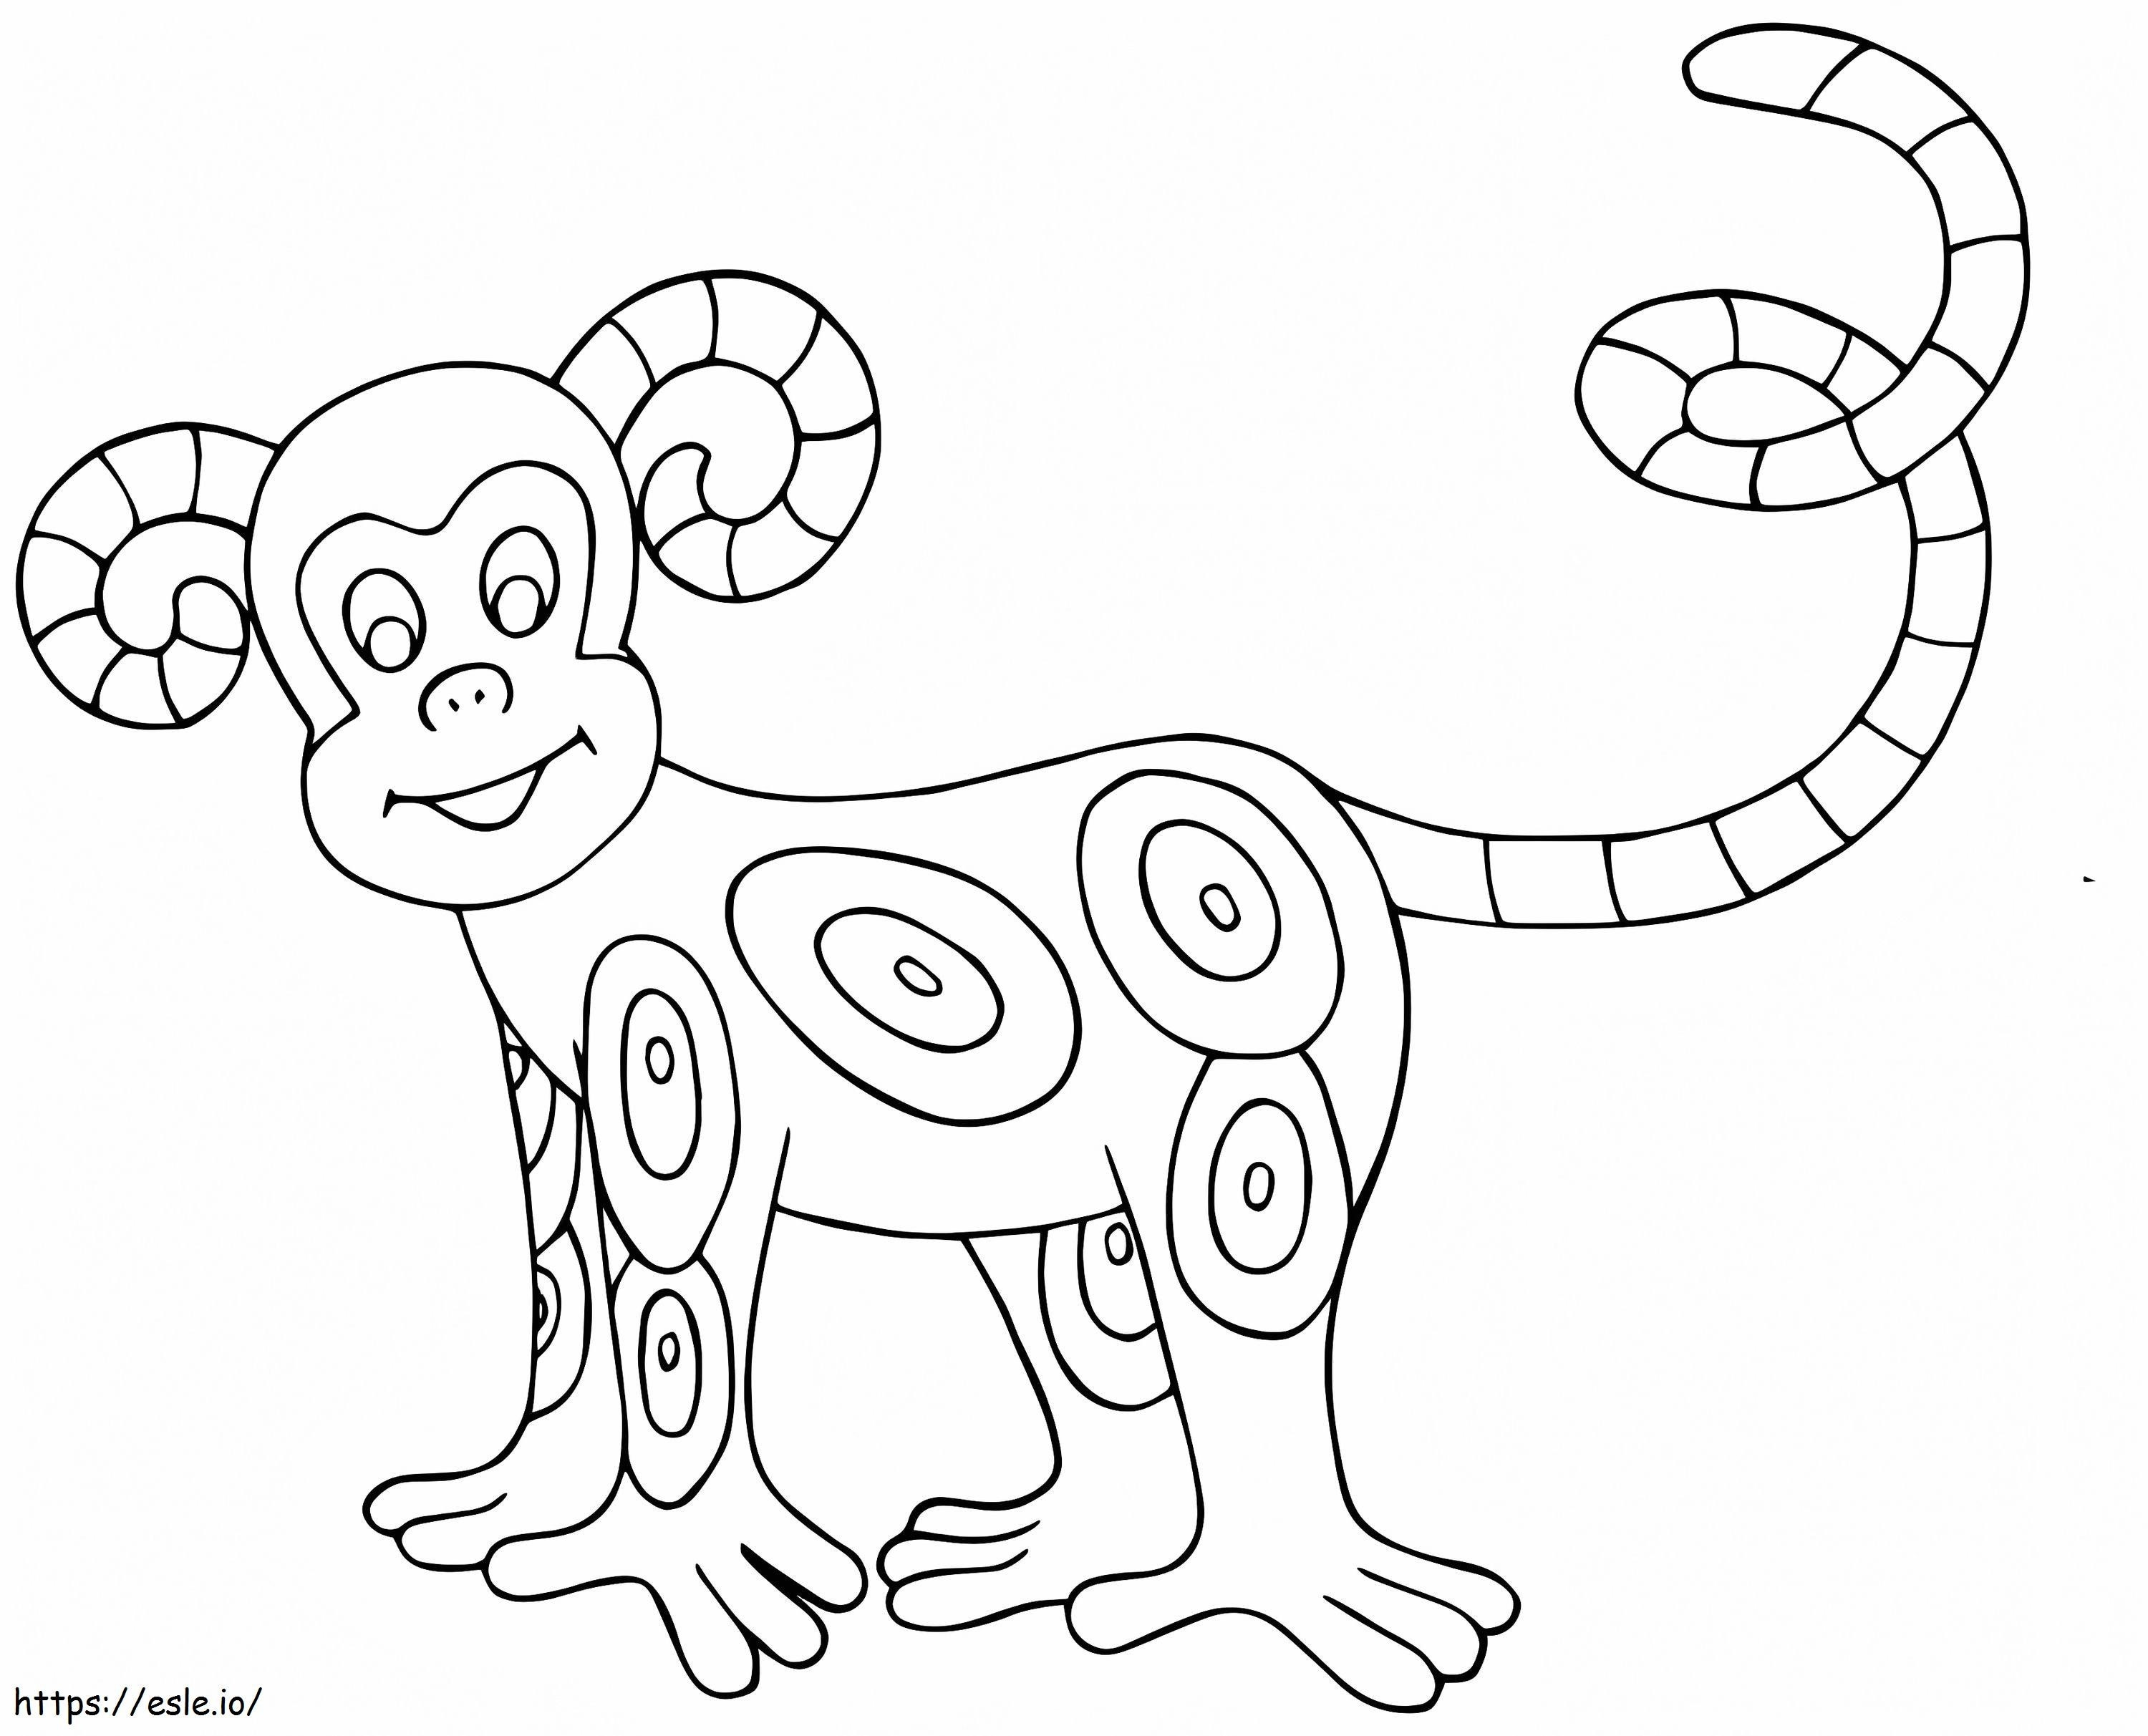 Monkey Alebrijes coloring page